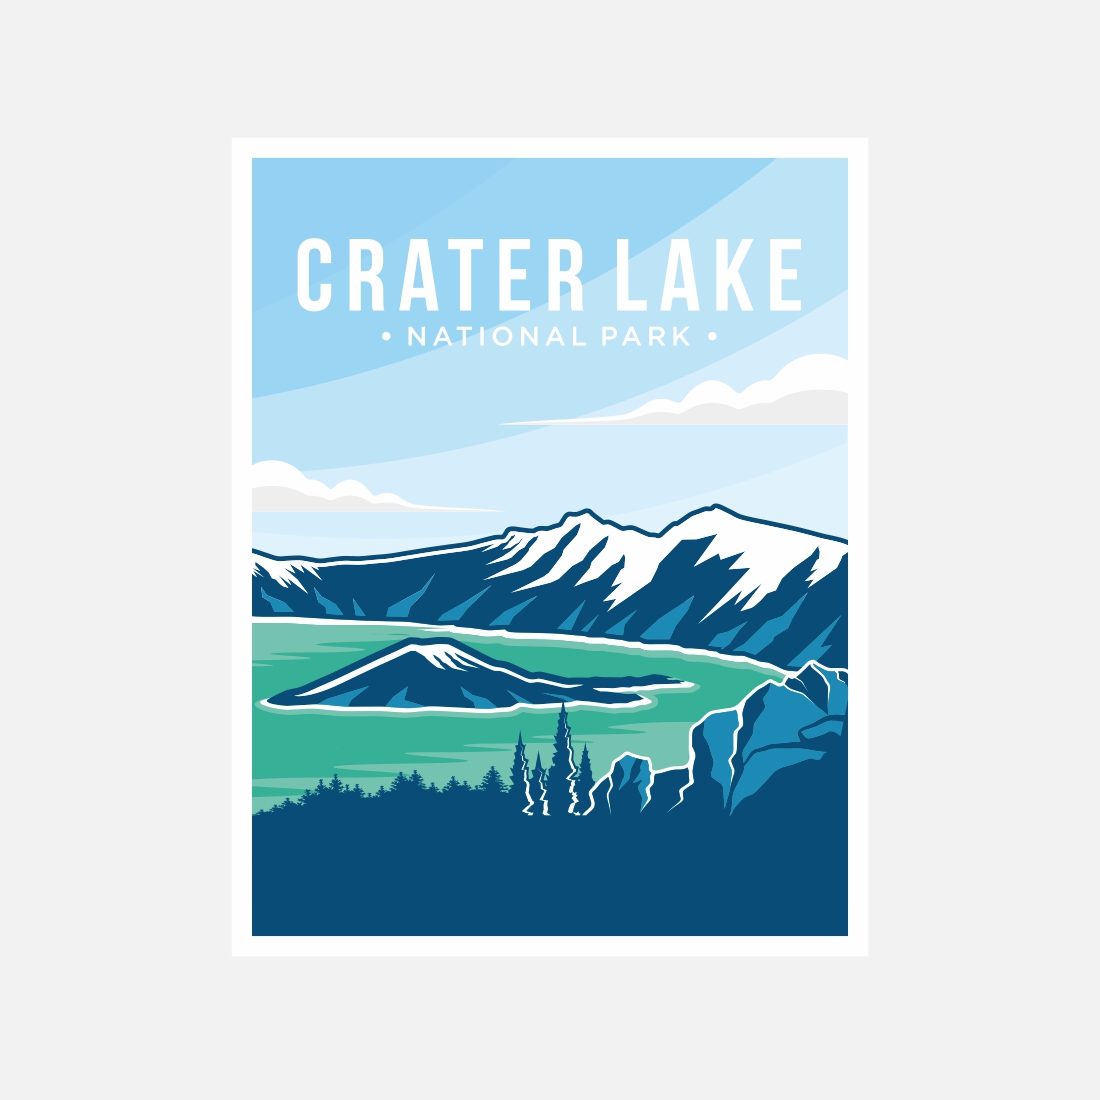 Crater Lake National Park Poster Vector Illustration Design – Only $10 preview image.